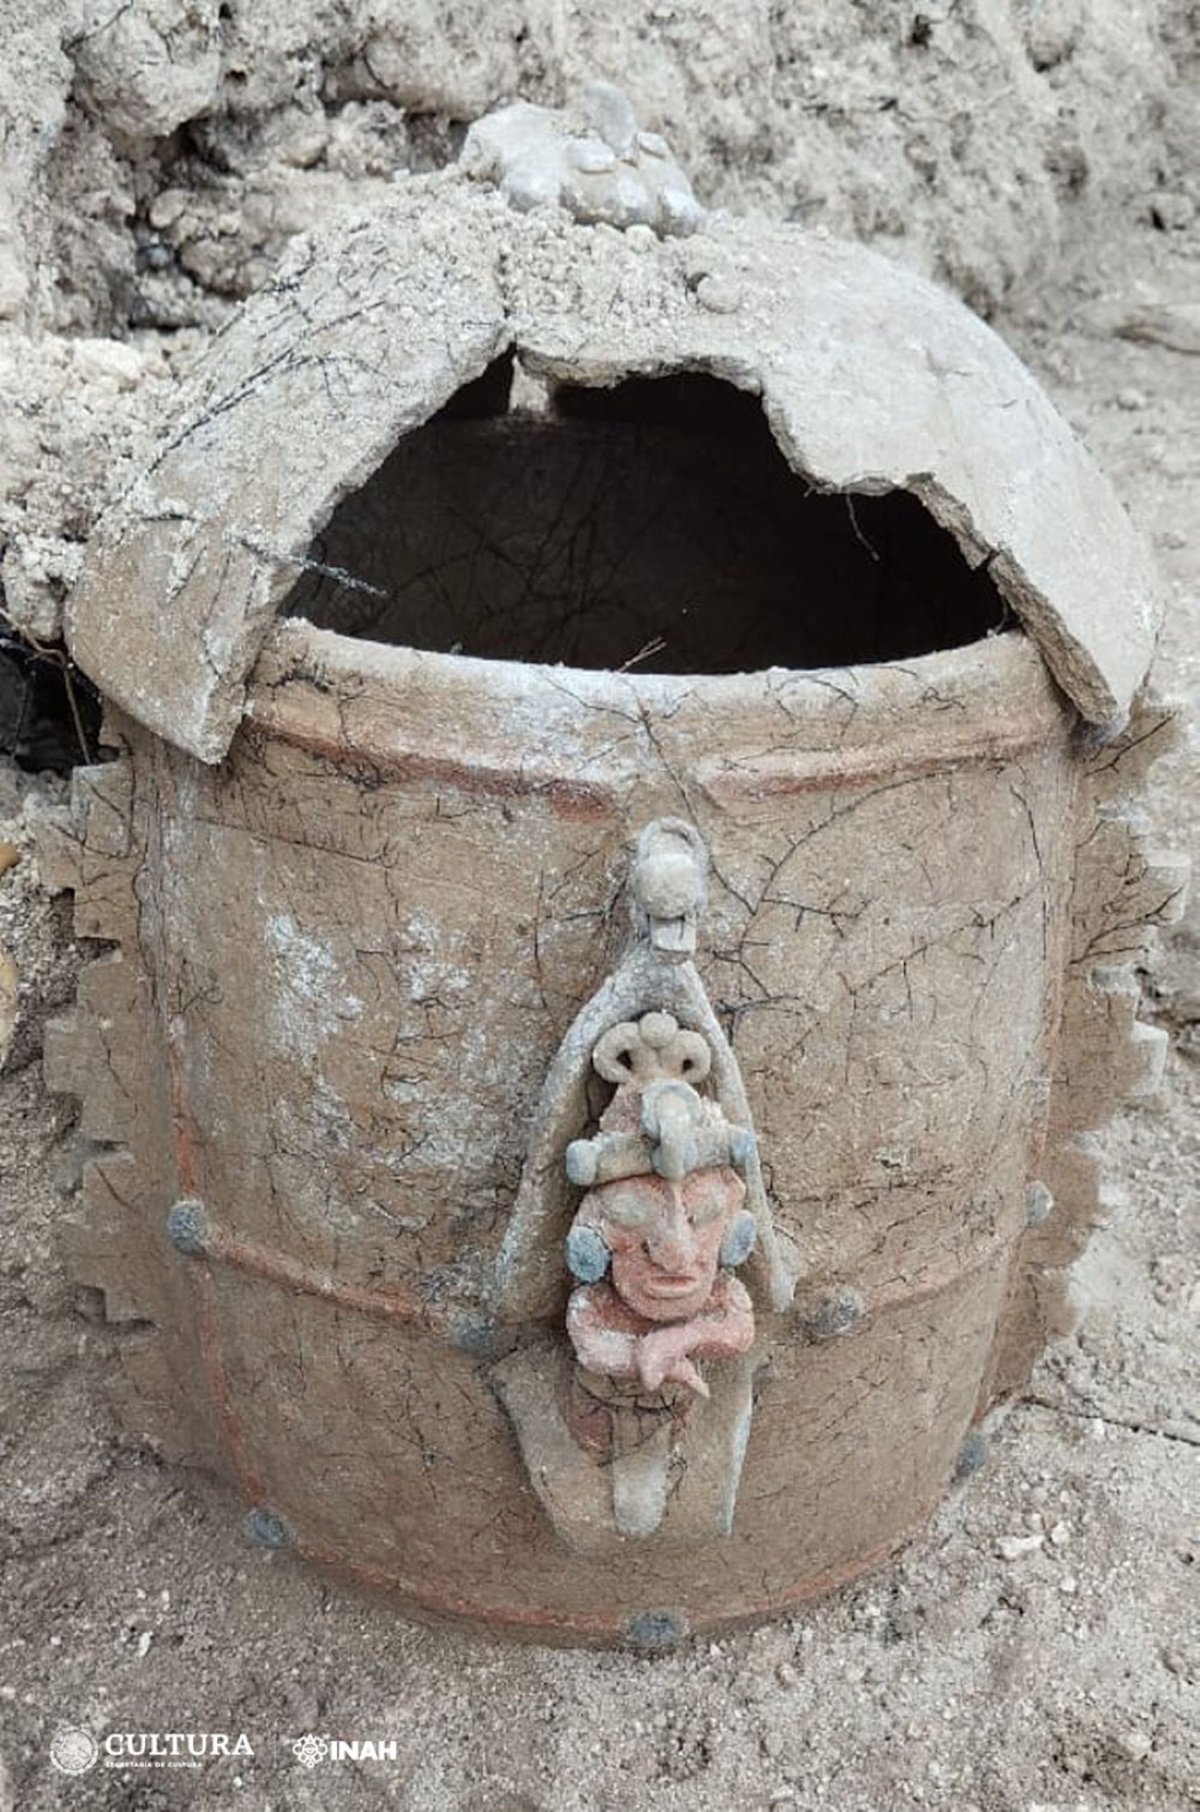 The ancient Maya funeral urn